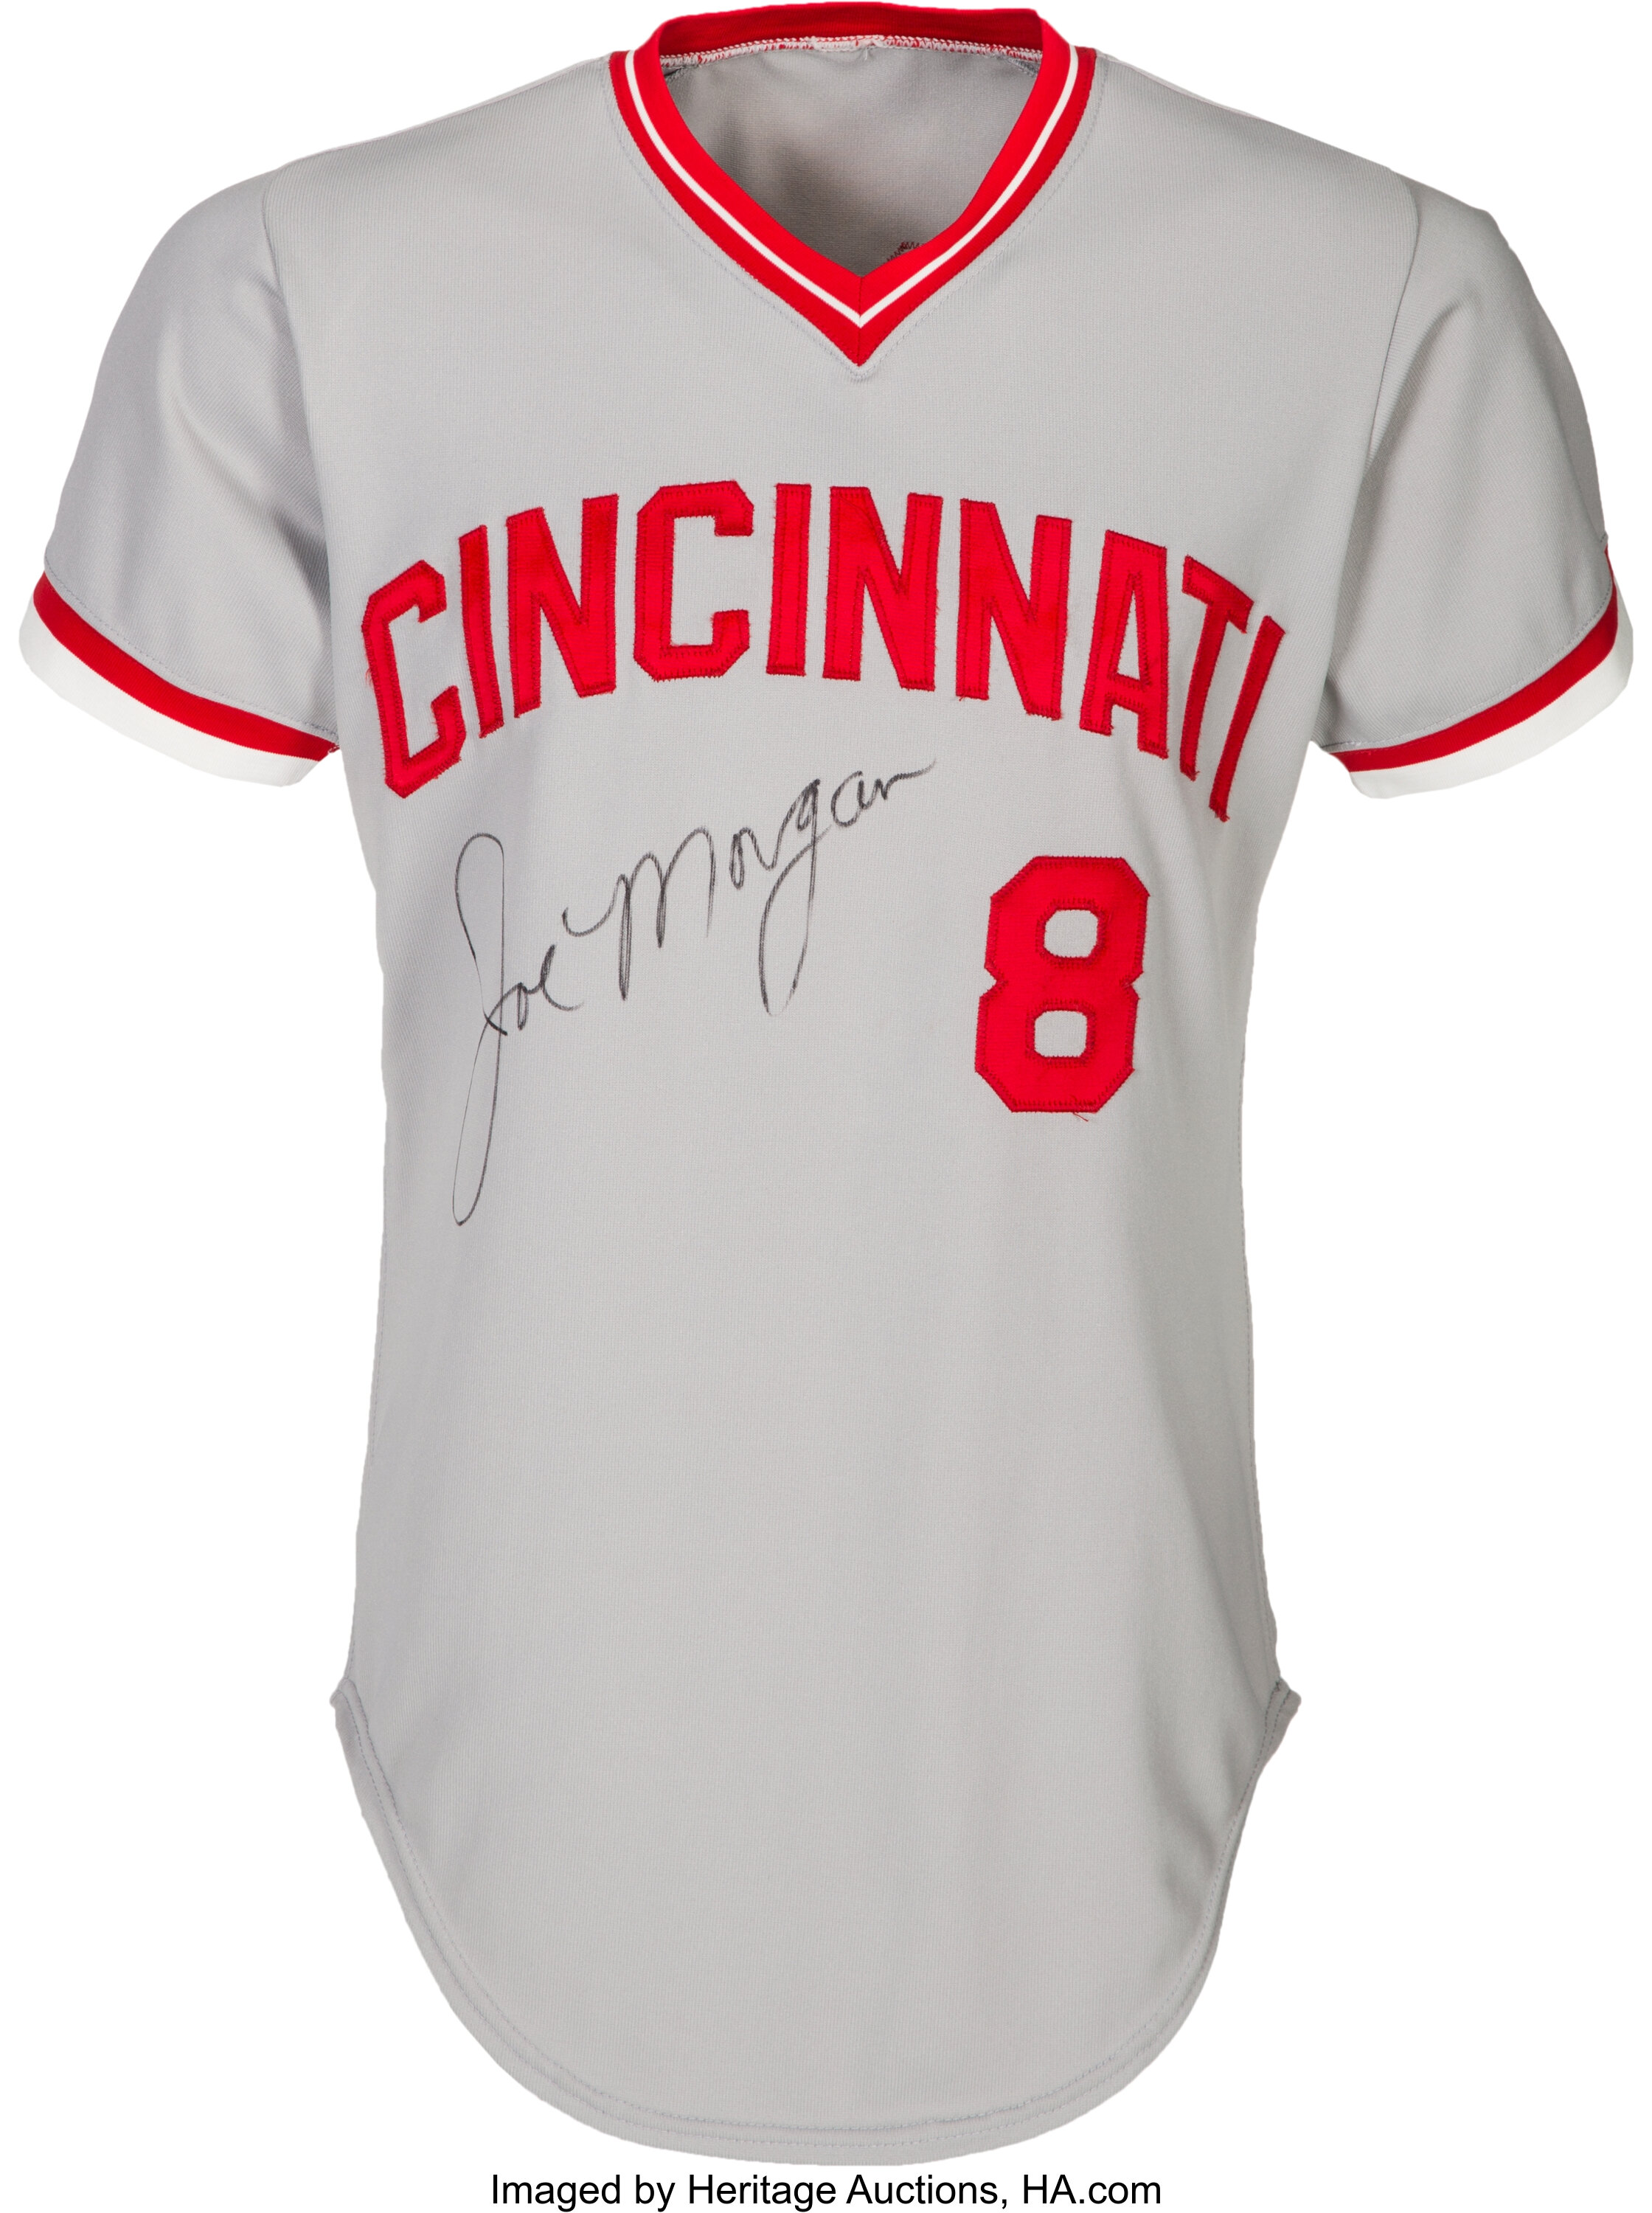 Cincinnati Reds to Wear #8 Patch in Memory of Joe Morgan – SportsLogos.Net  News